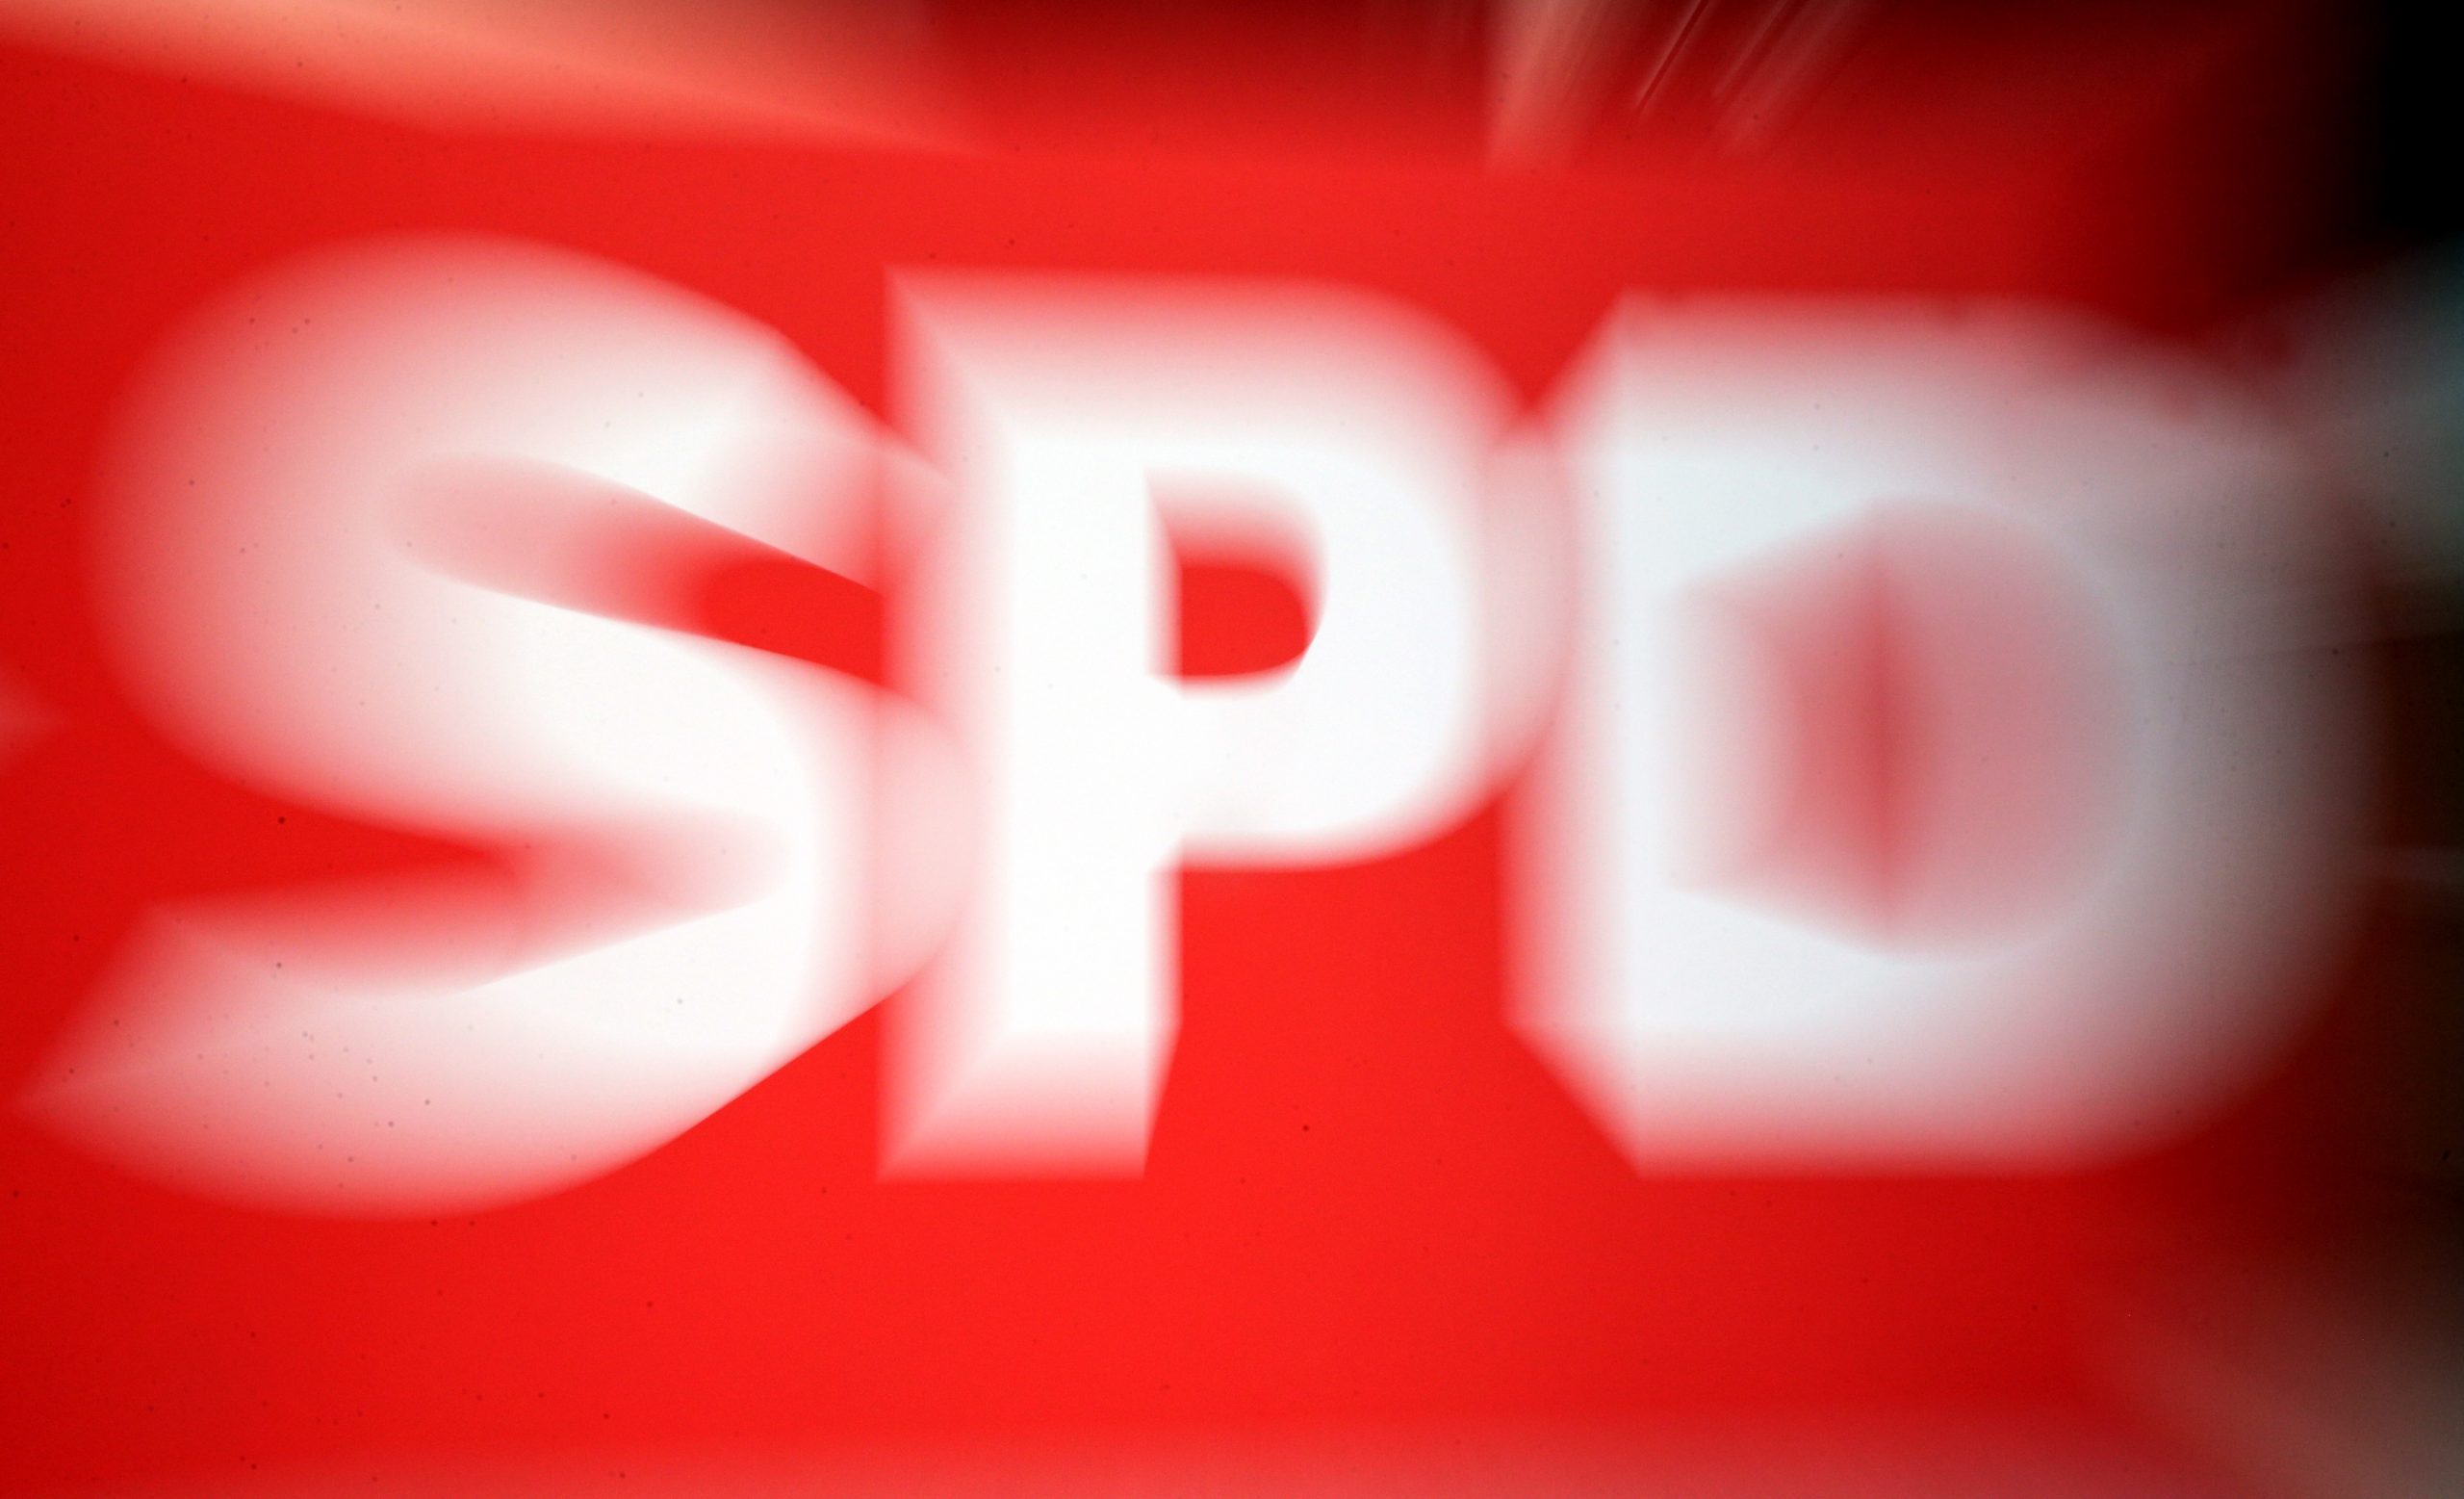 SPD Hamburg